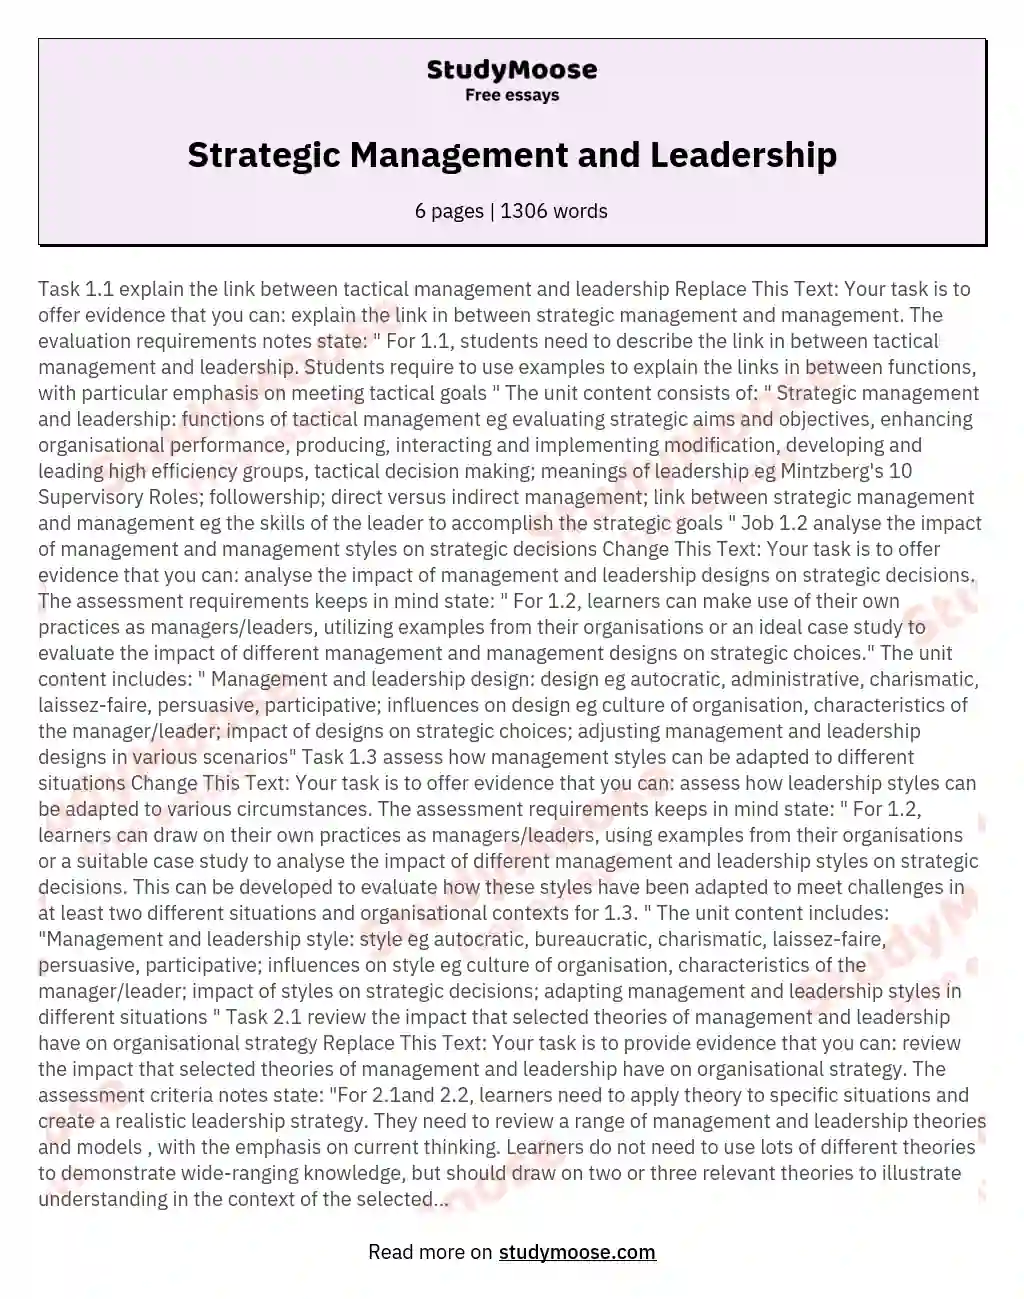 Strategic Management and Leadership essay